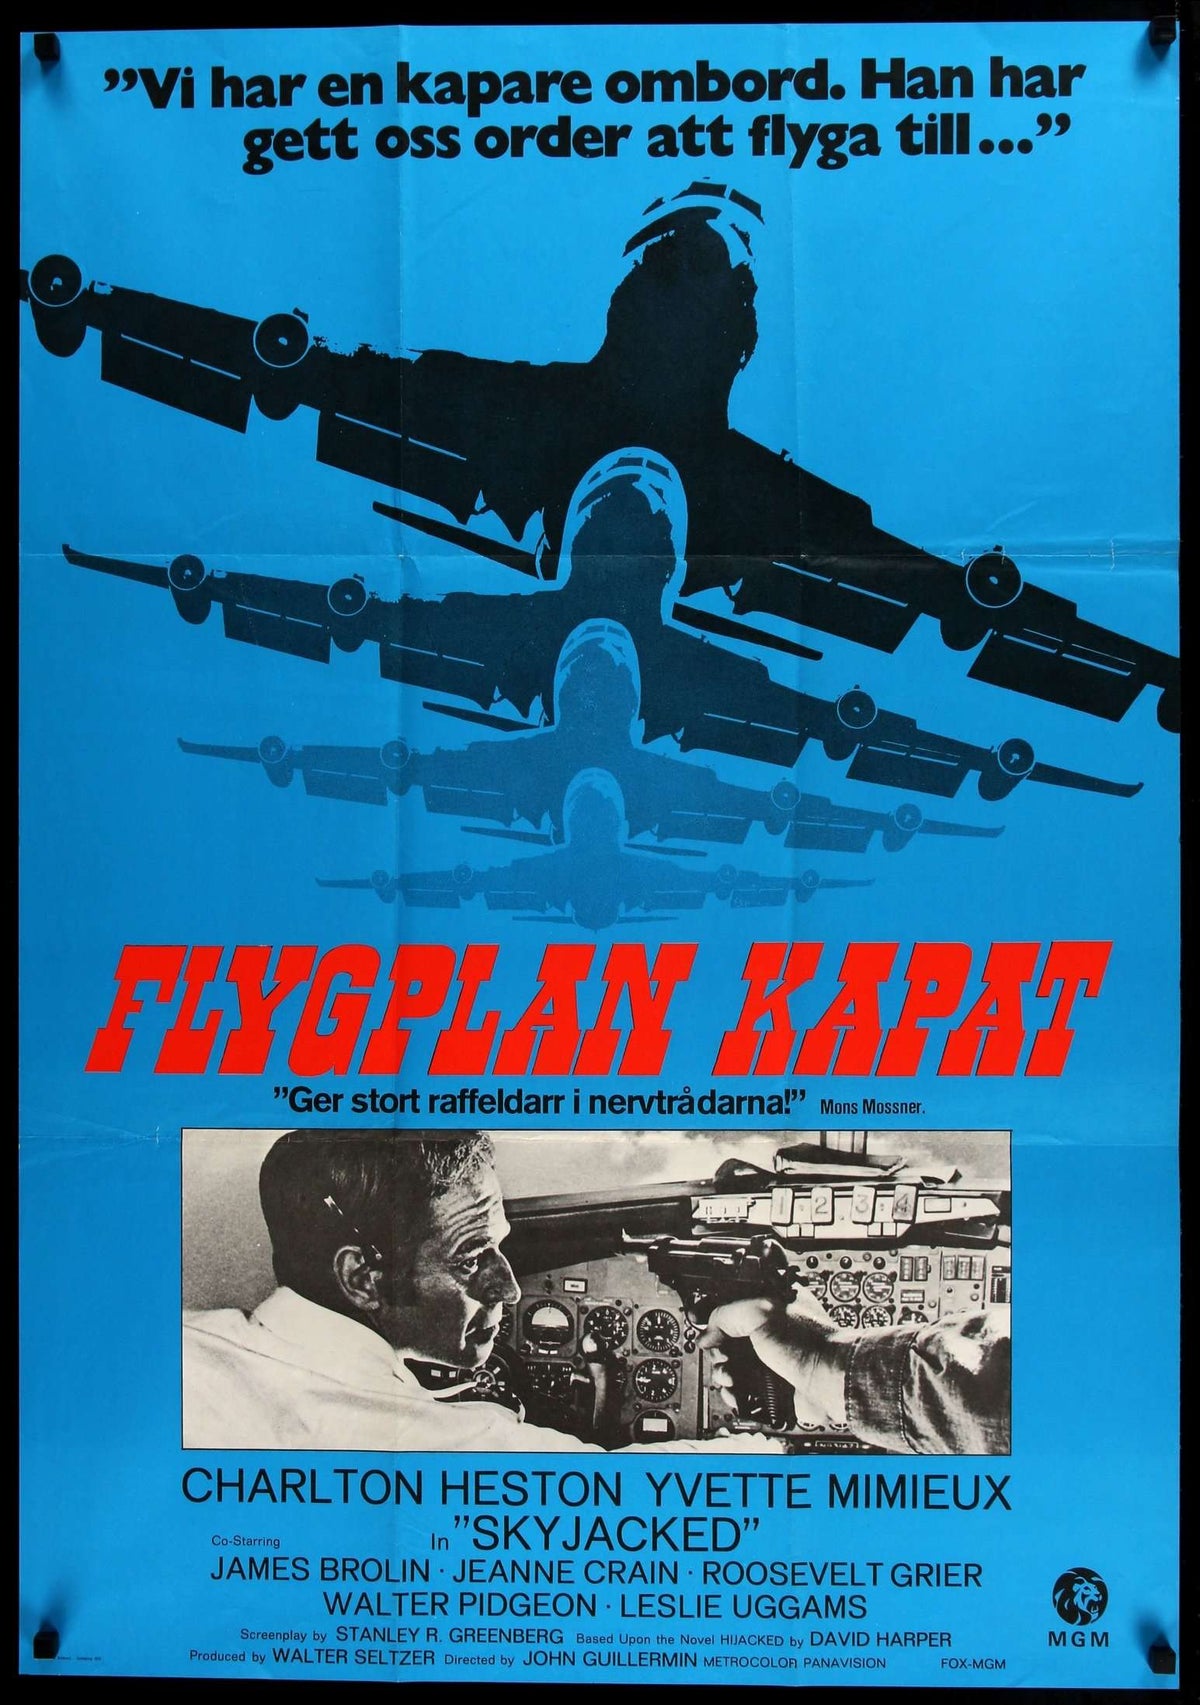 Skyjacked (1972) original movie poster for sale at Original Film Art